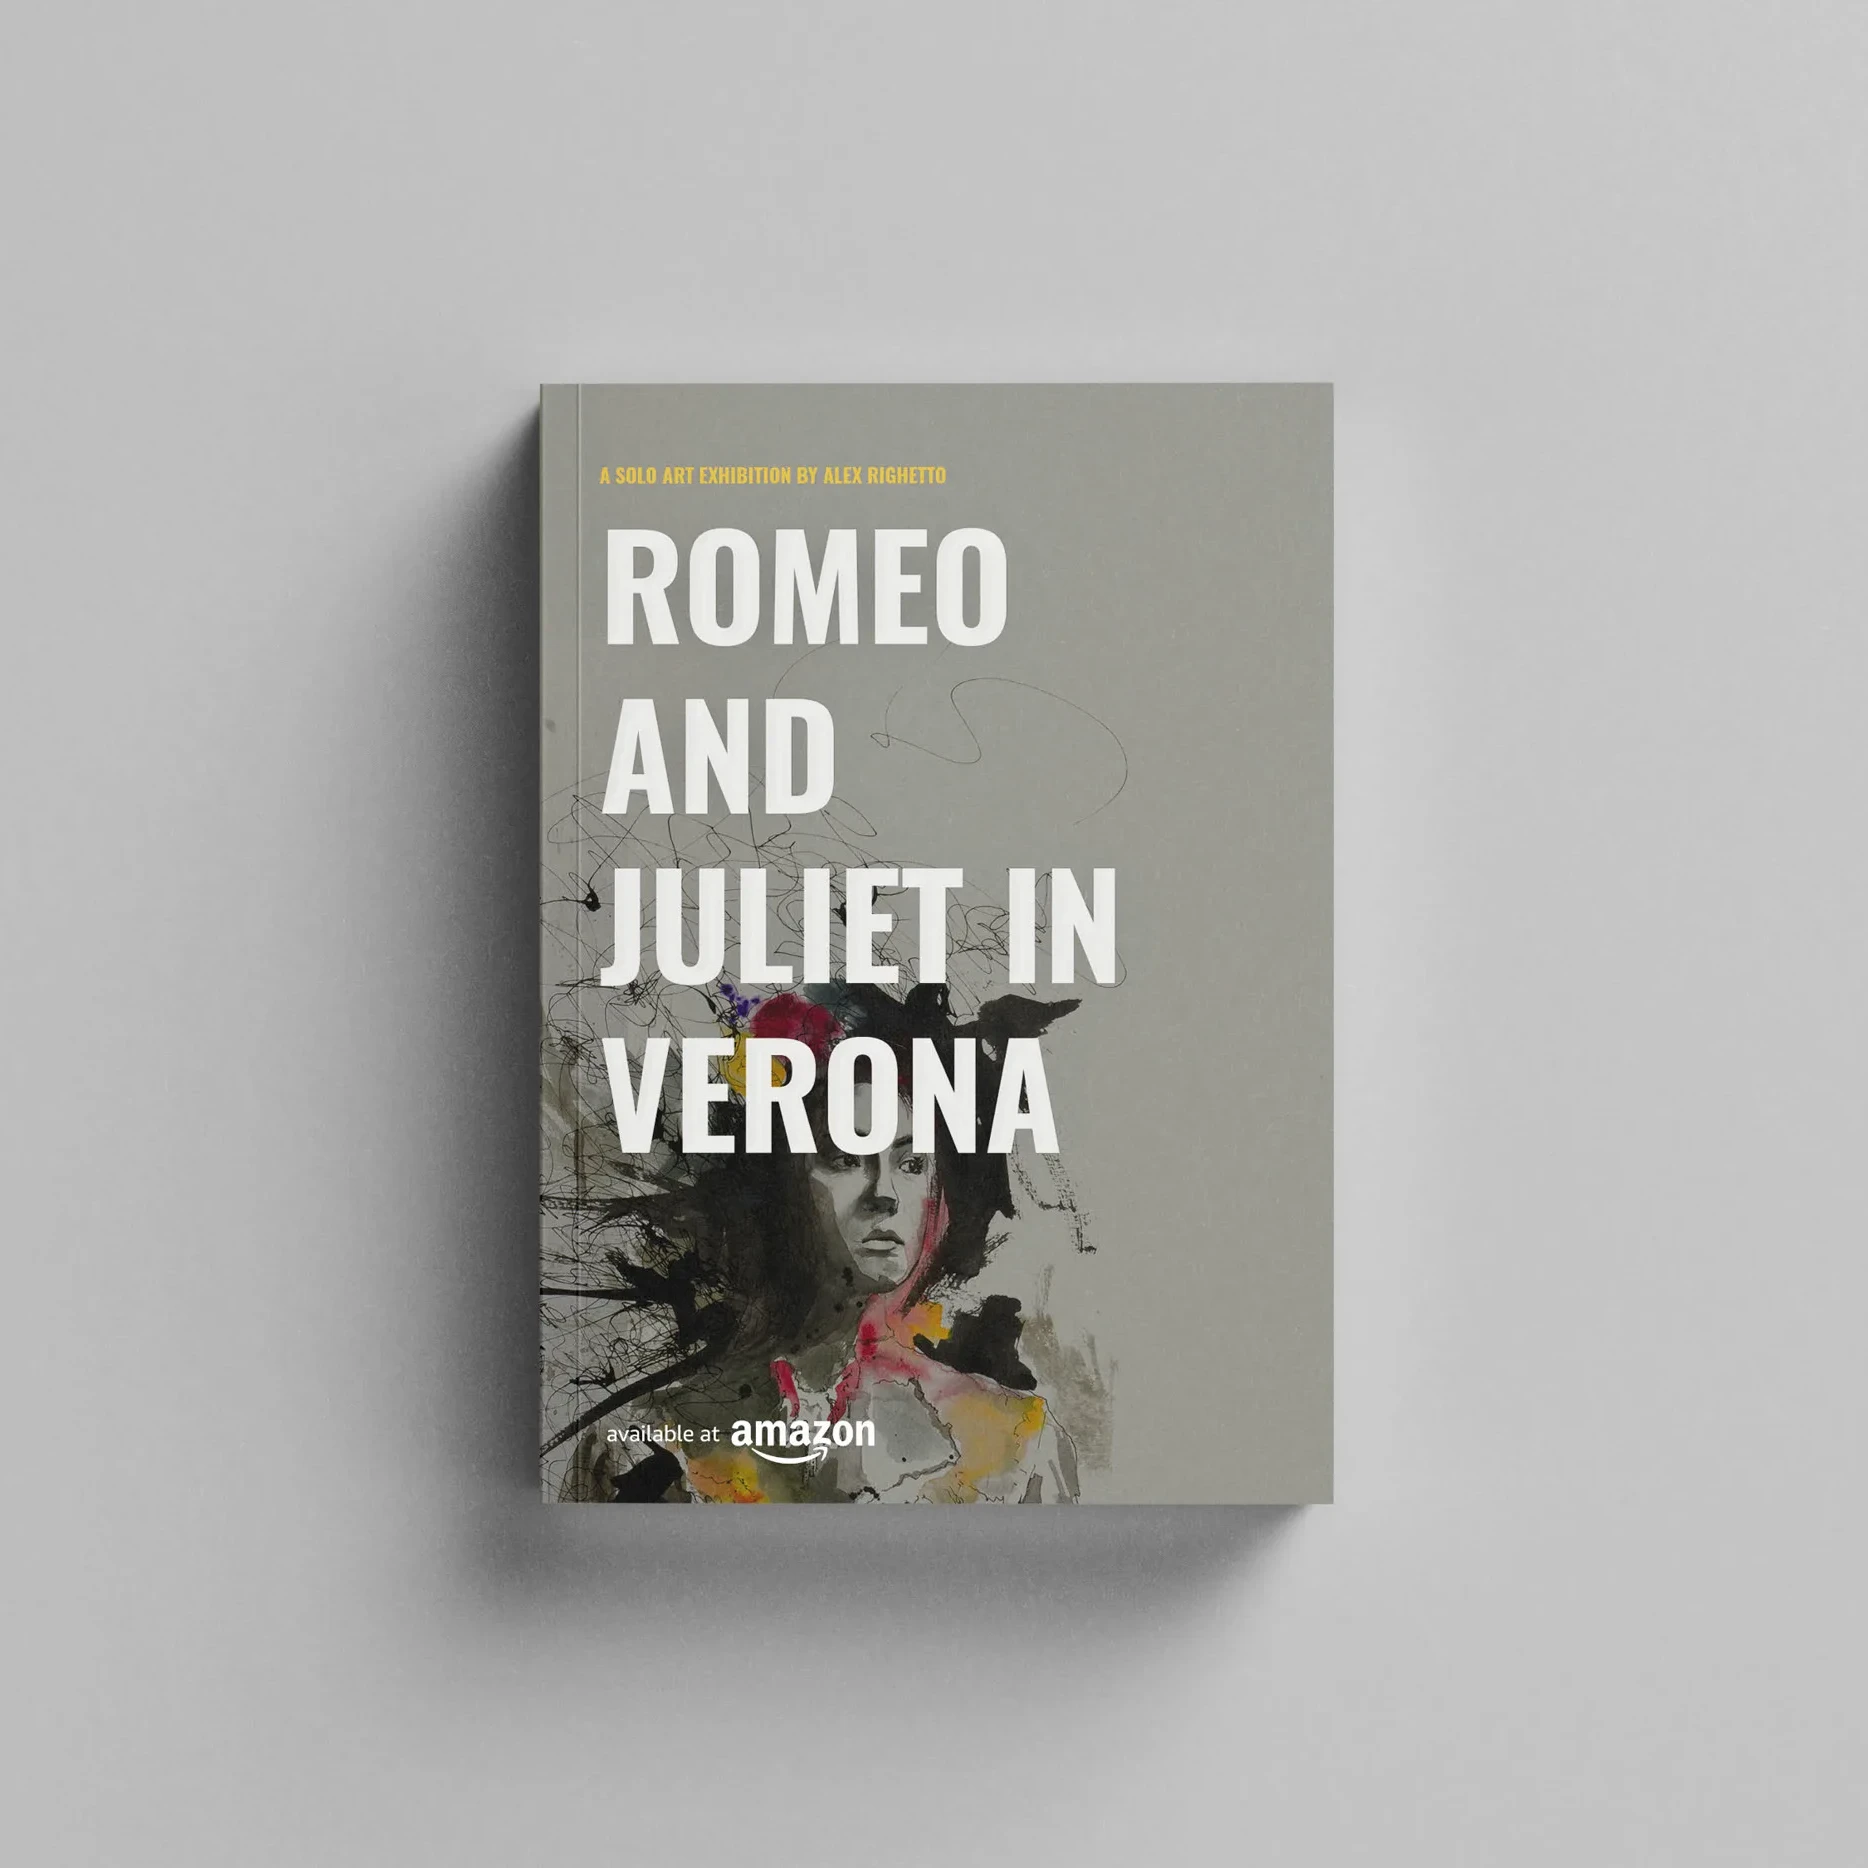 artwork book romeo and juliet alex righetto 03092024 1 jpg uai